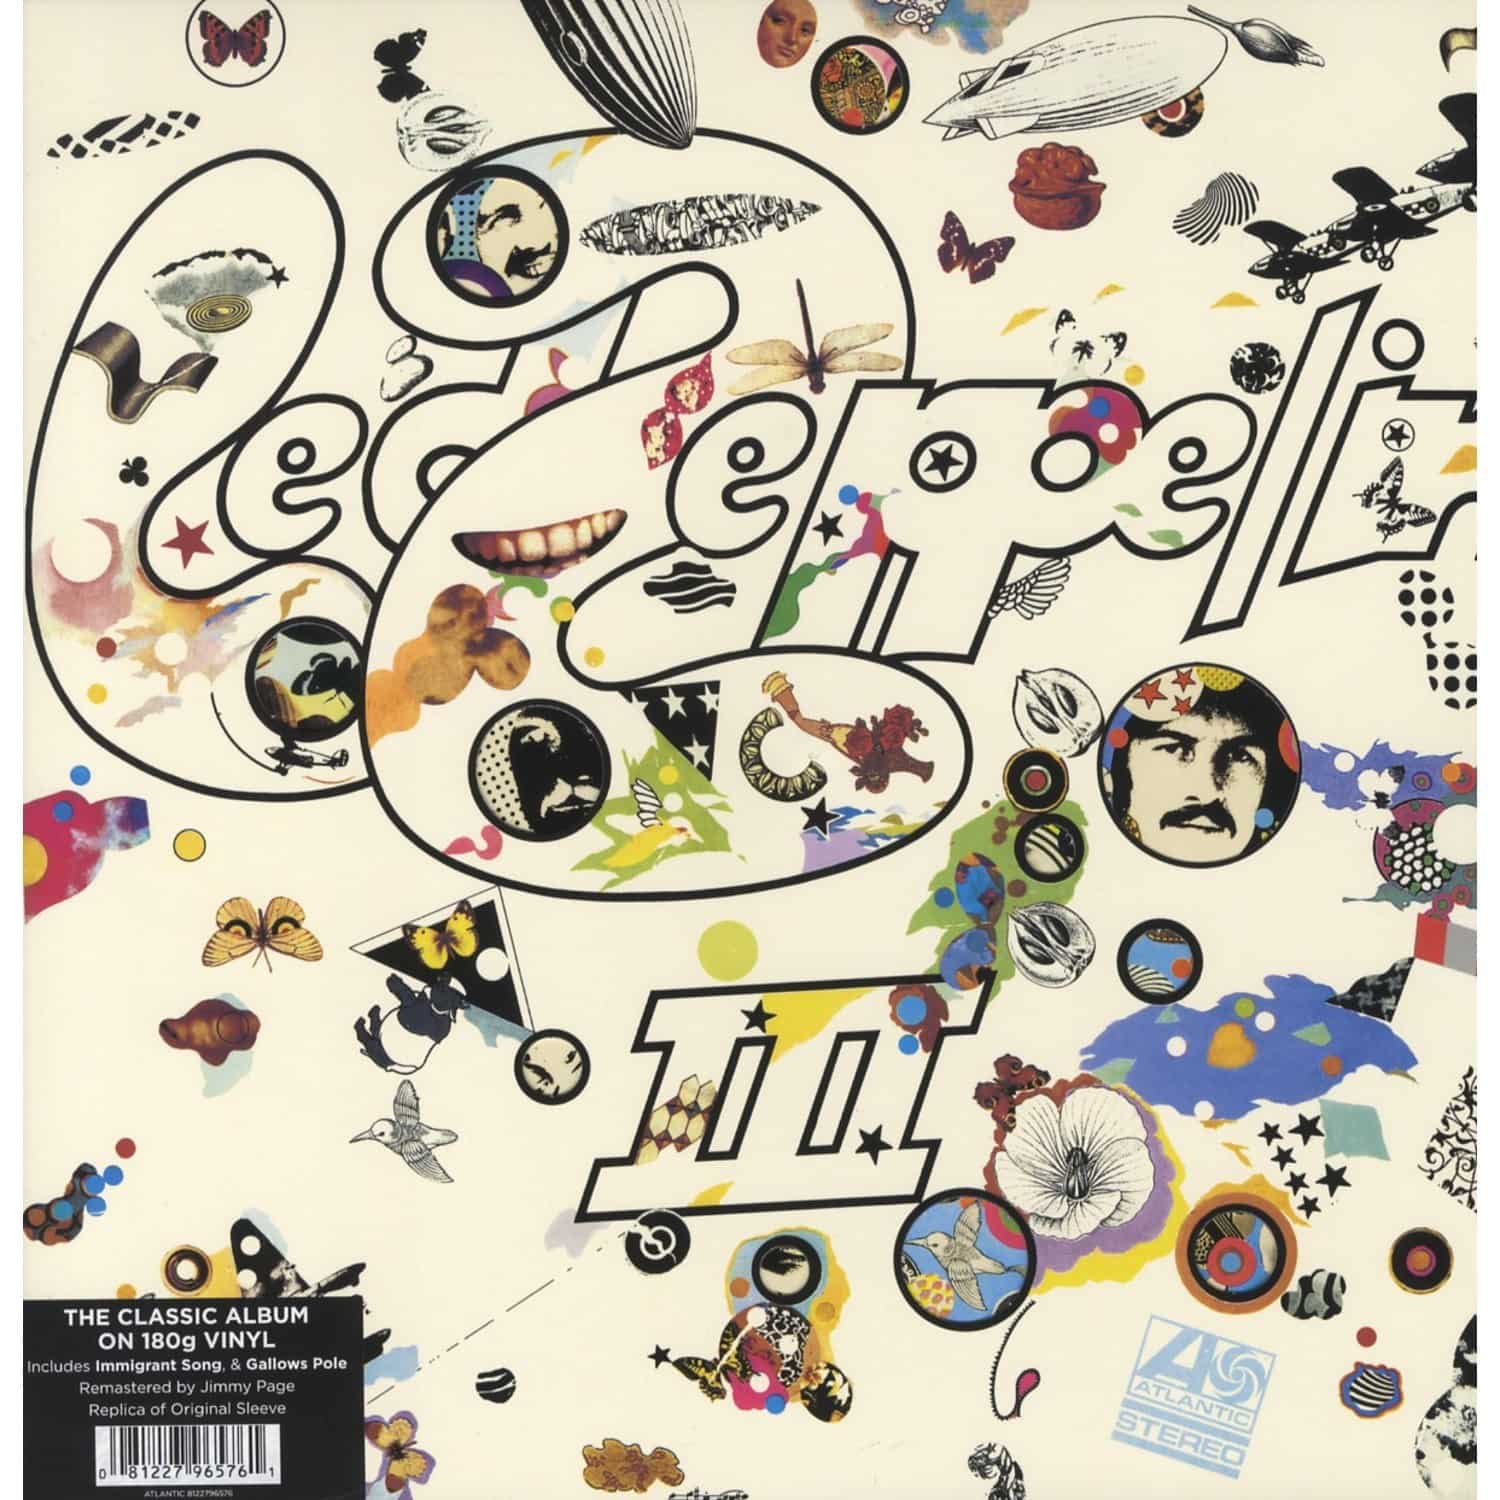 Led Zeppelin - LED ZEPPELIN III 